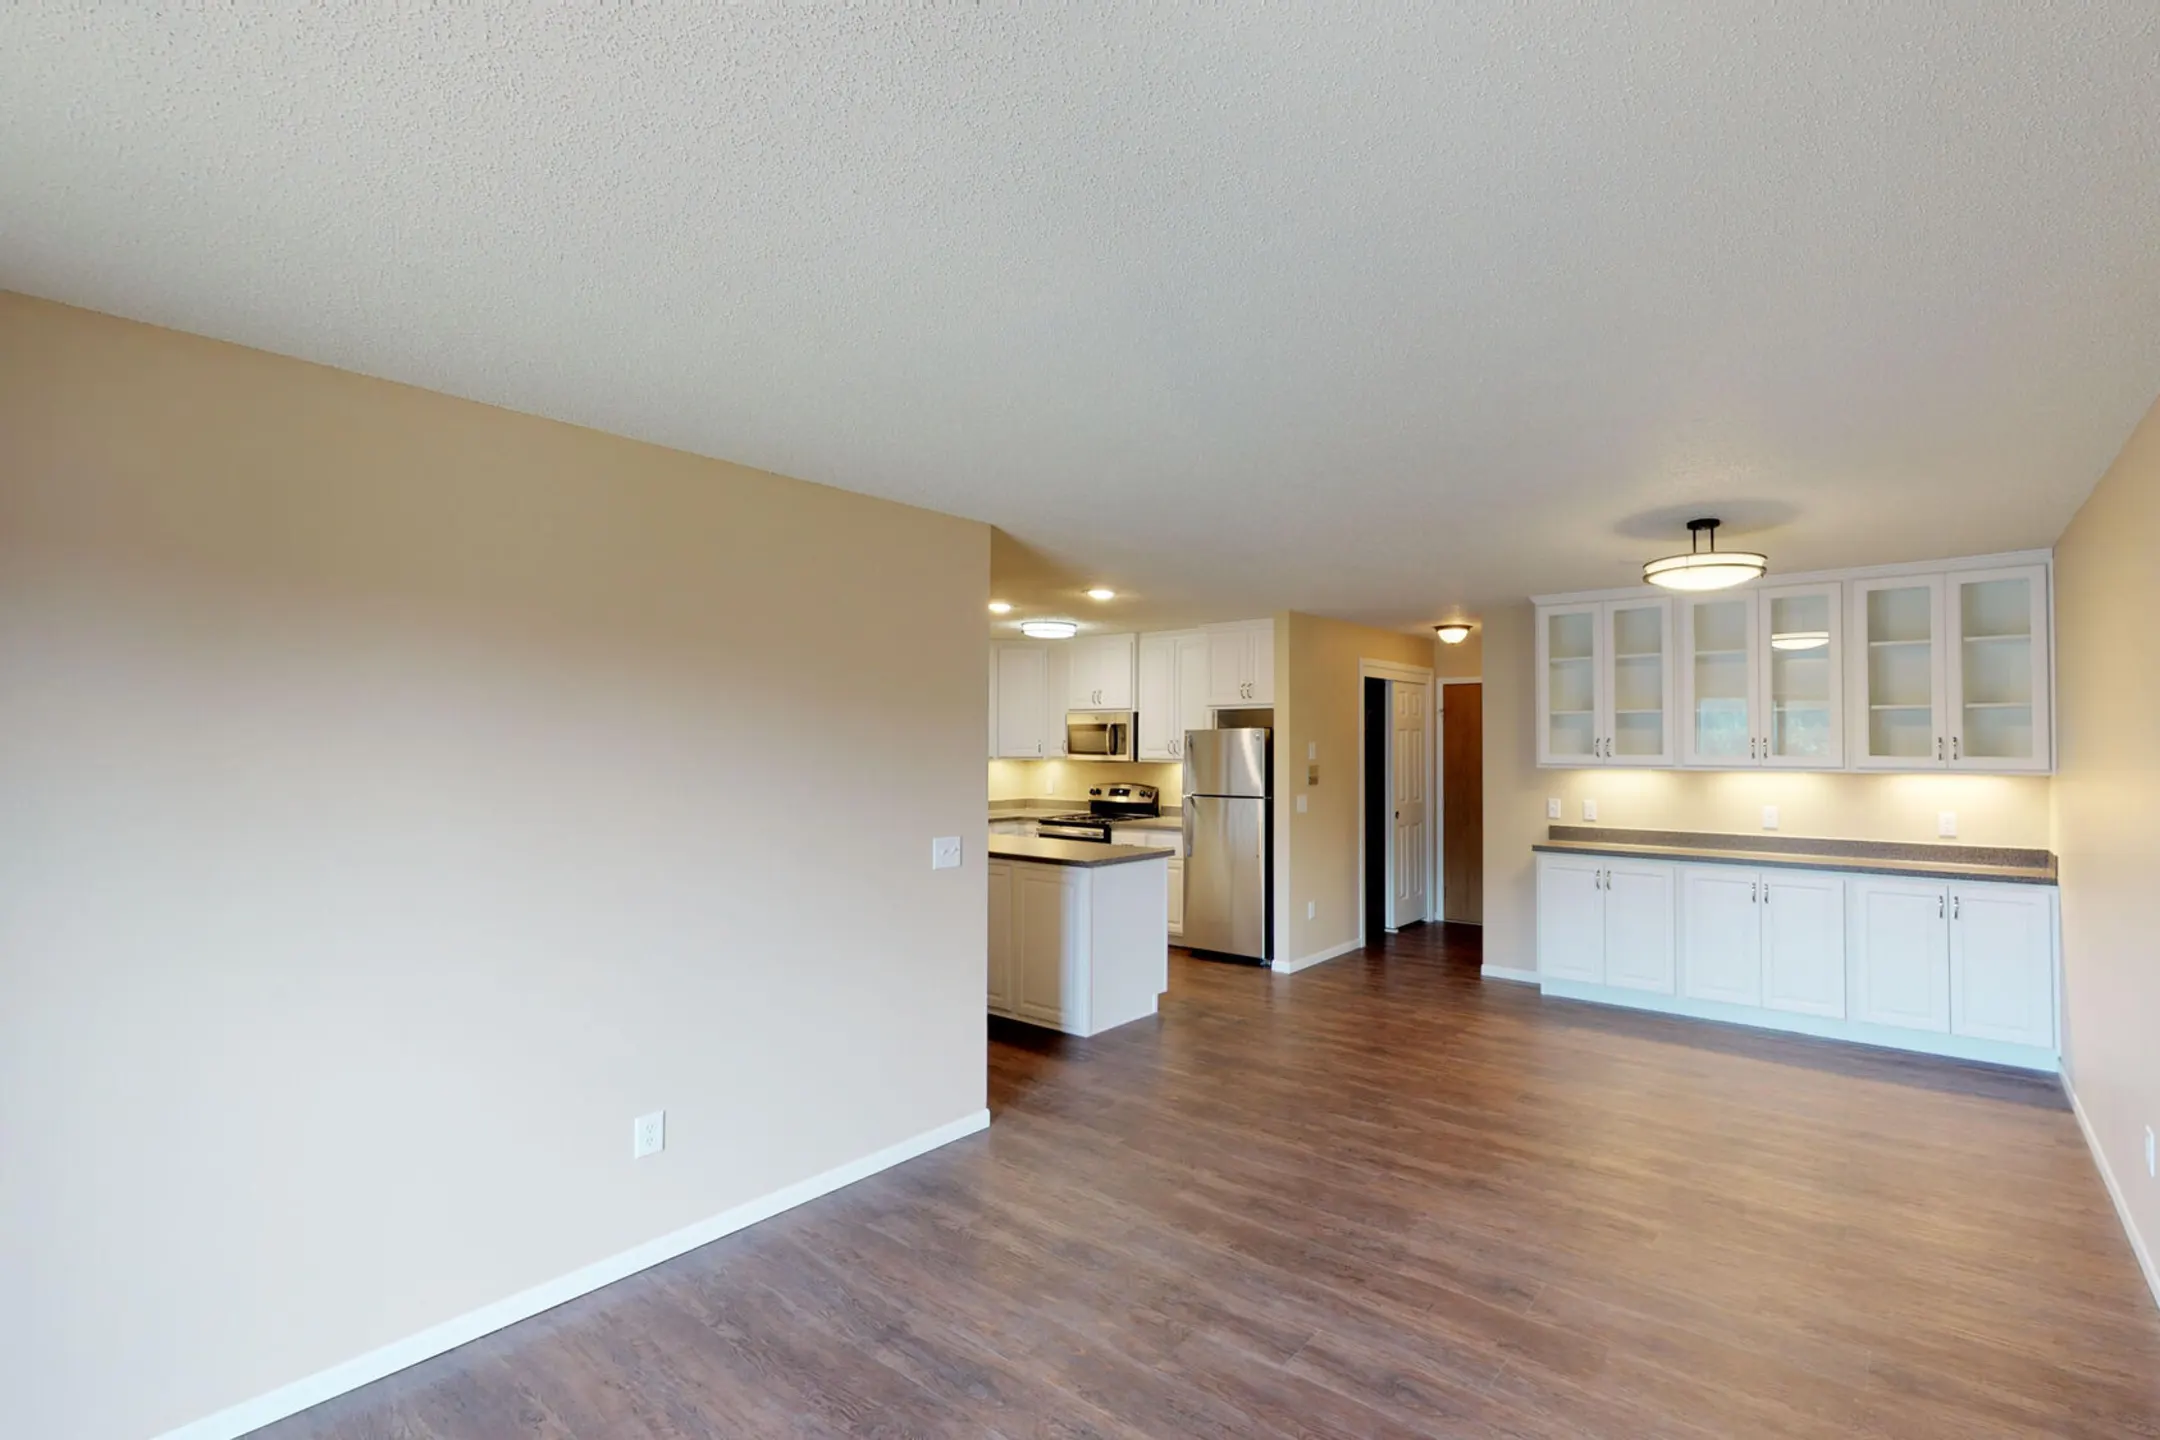 Living Room - Terrace Hills Apartments - Sioux Falls, SD